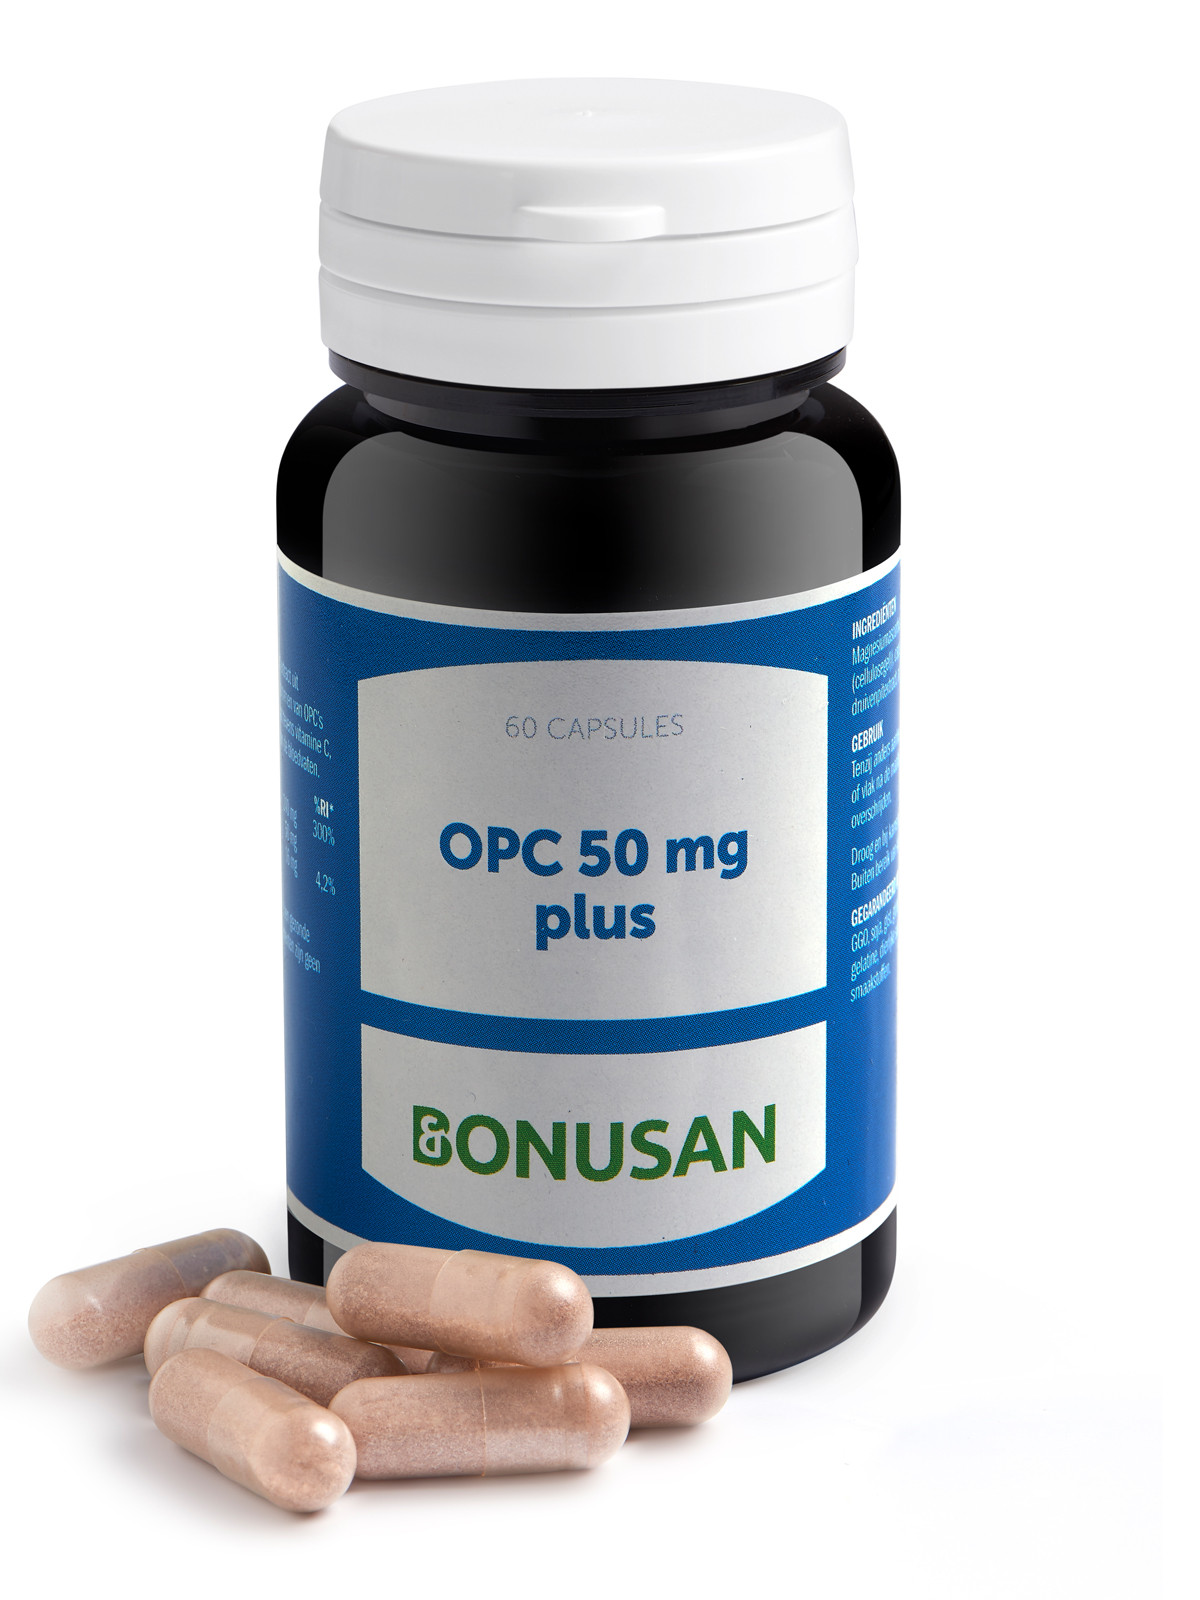 Bonusan - OPC 50 mg plus